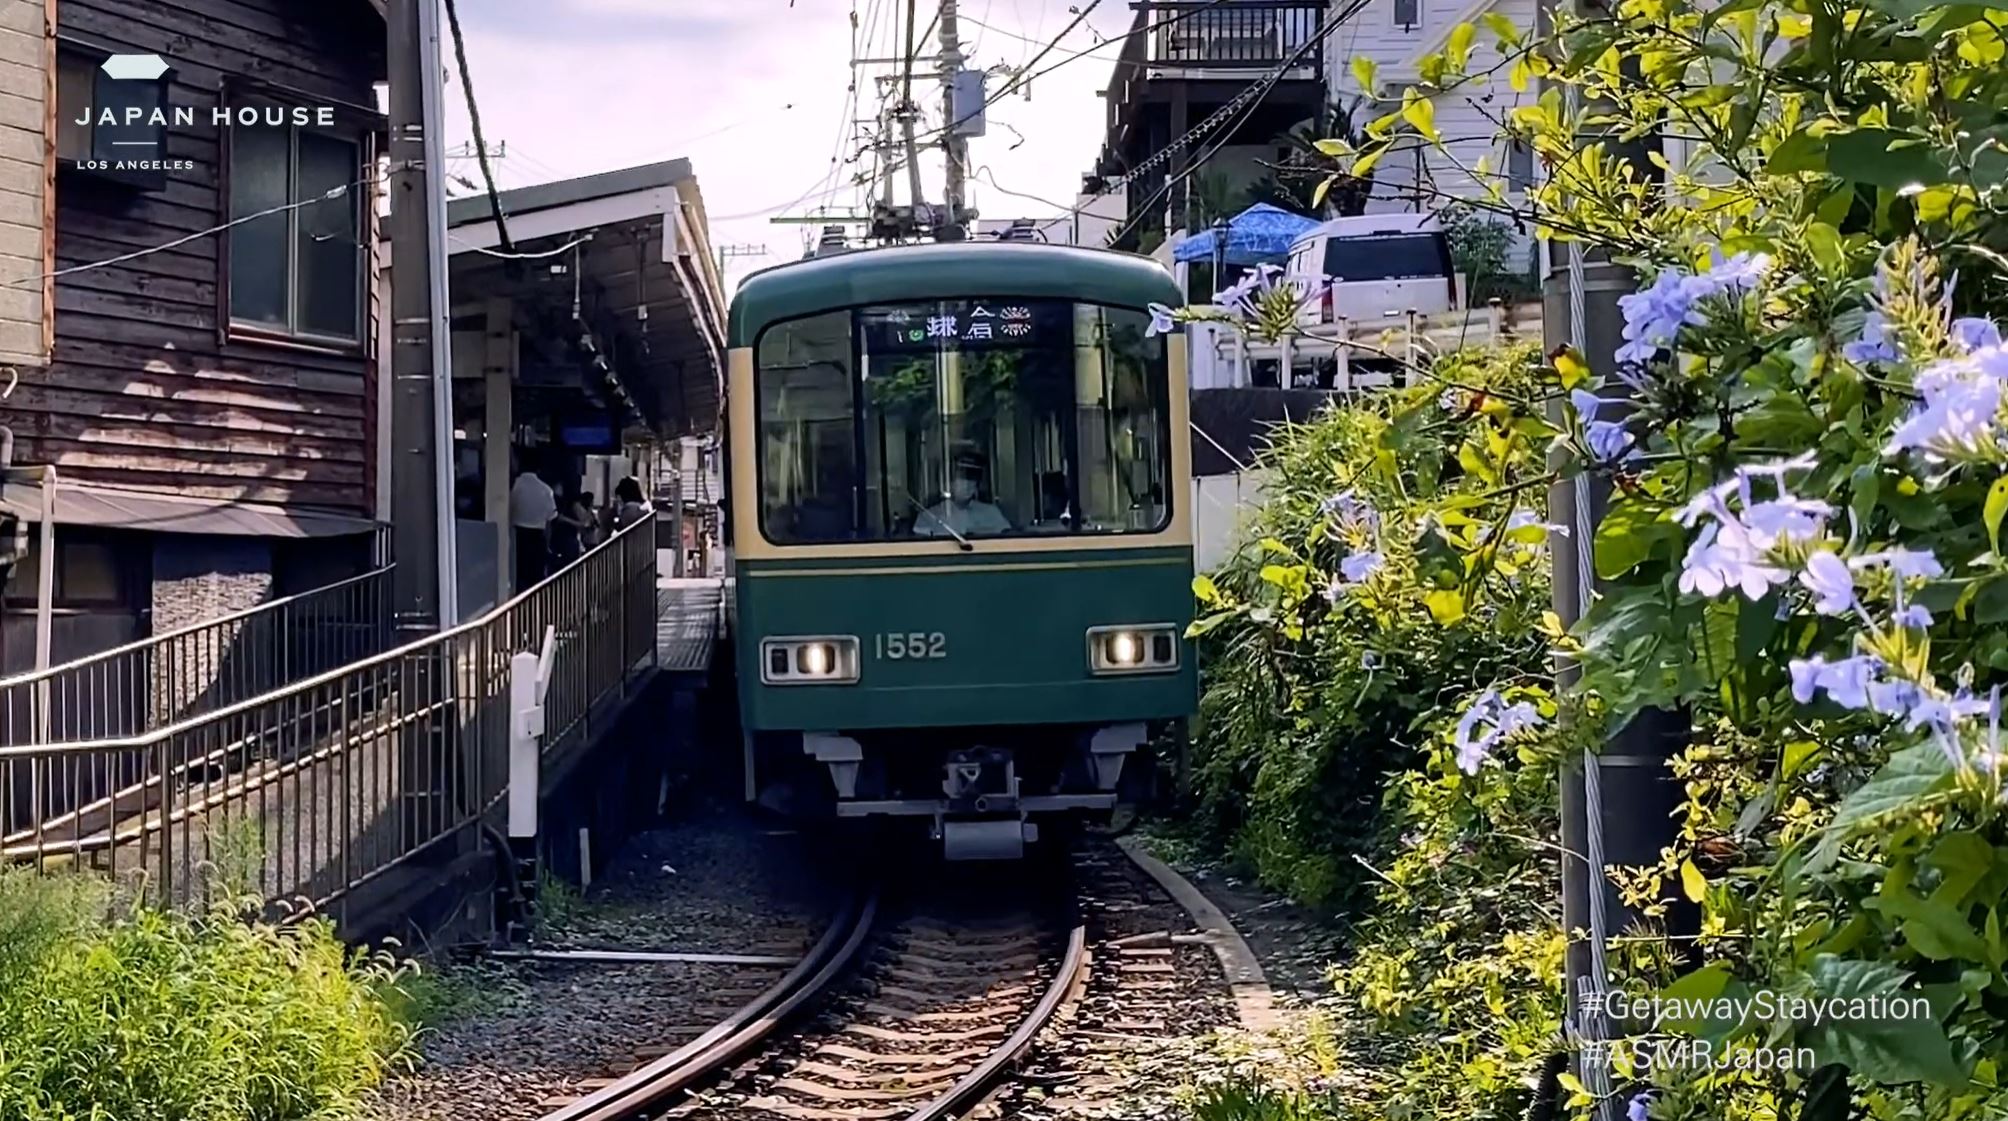 Japanese train leaving a train station